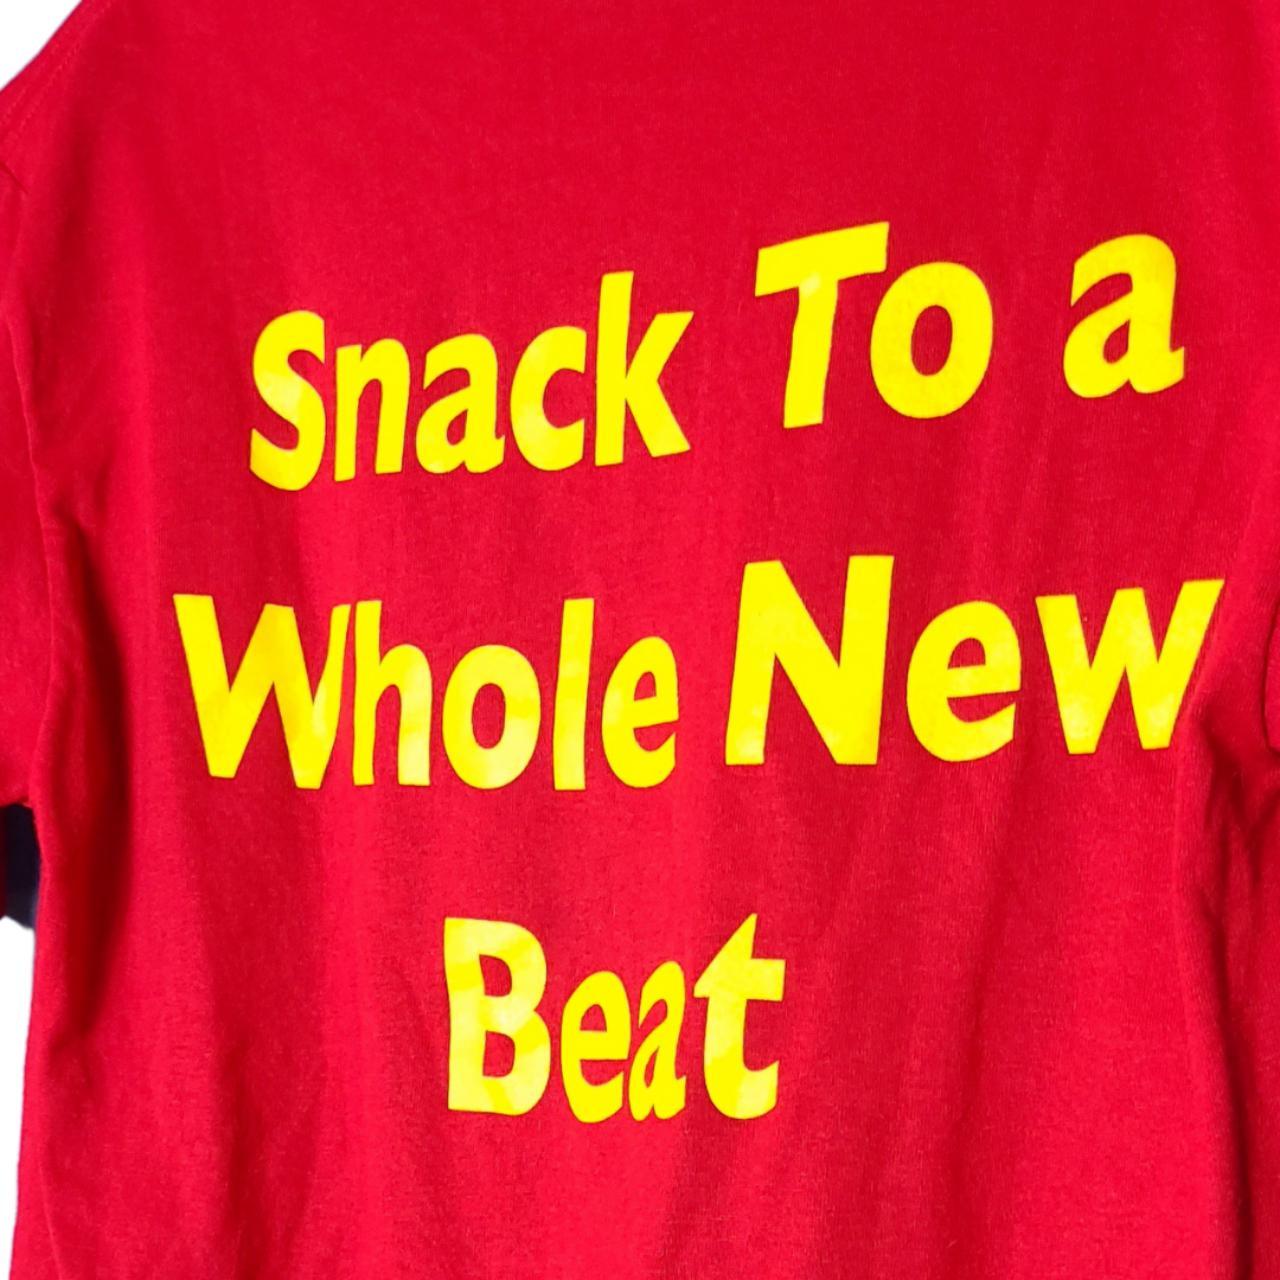 Product Image 3 - Pringles Stix Snack T-Shirt

Details: 
Size: